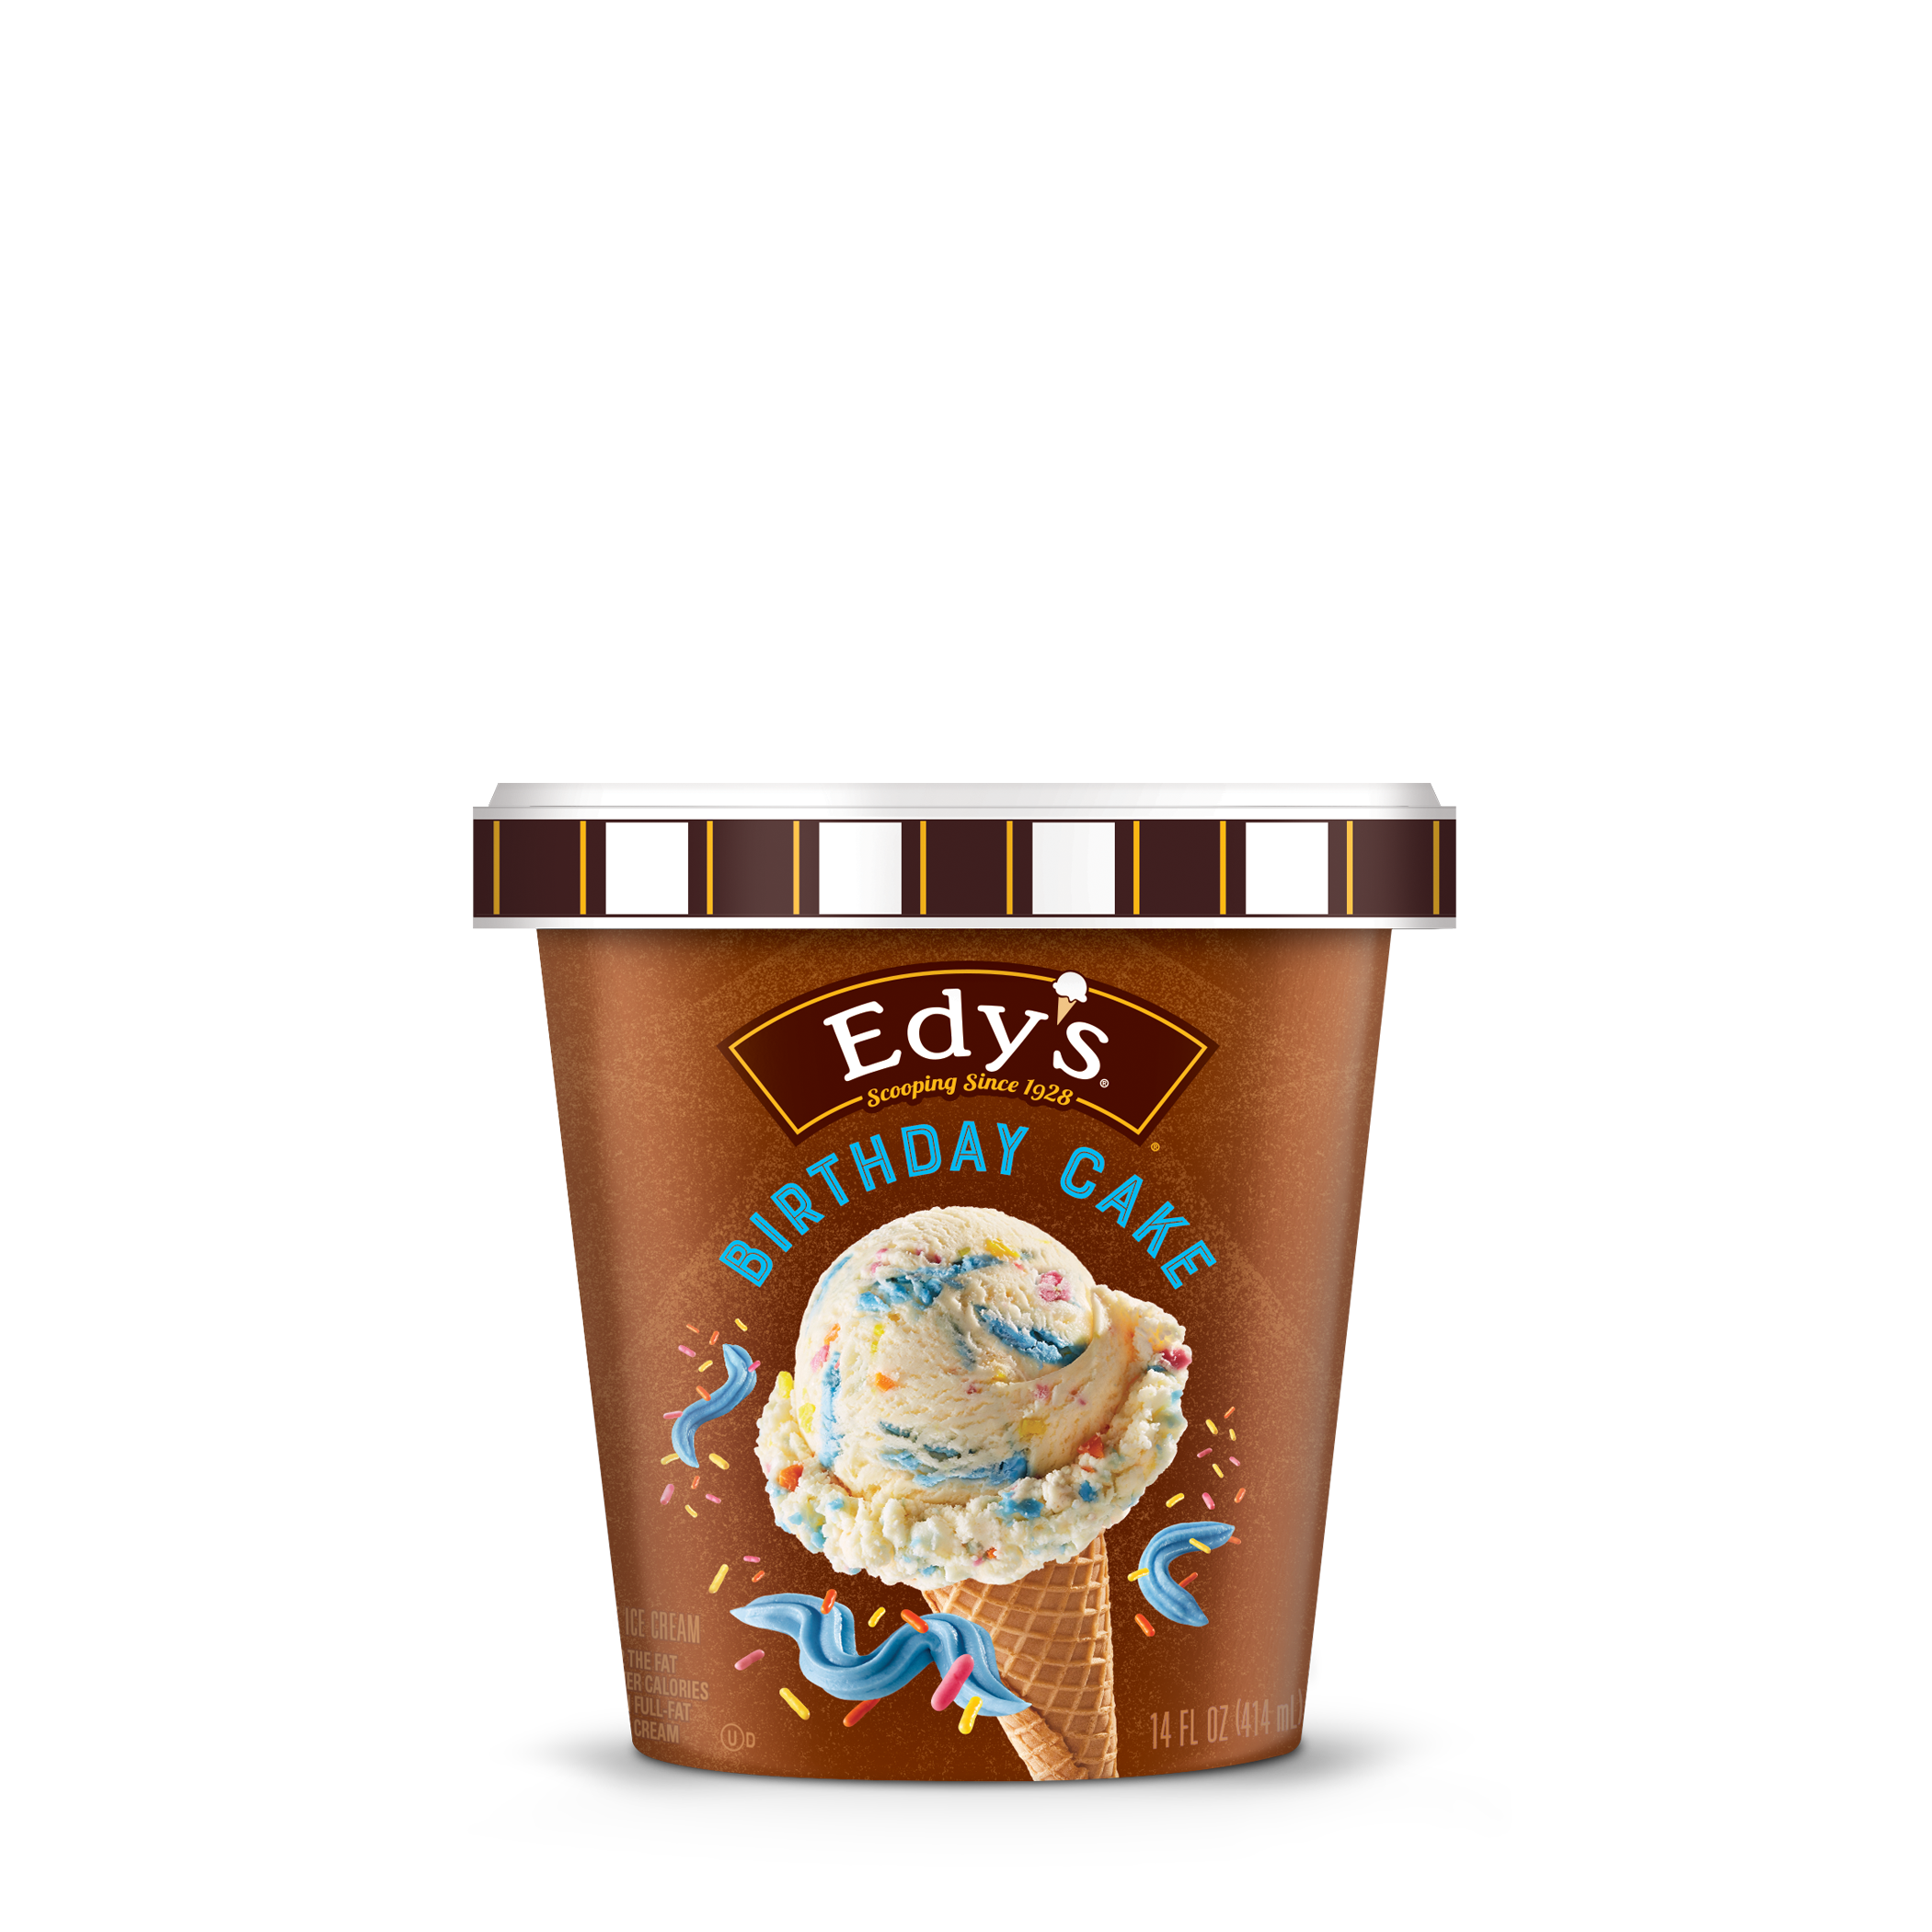 Carton of Edy's birthday cake ice cream